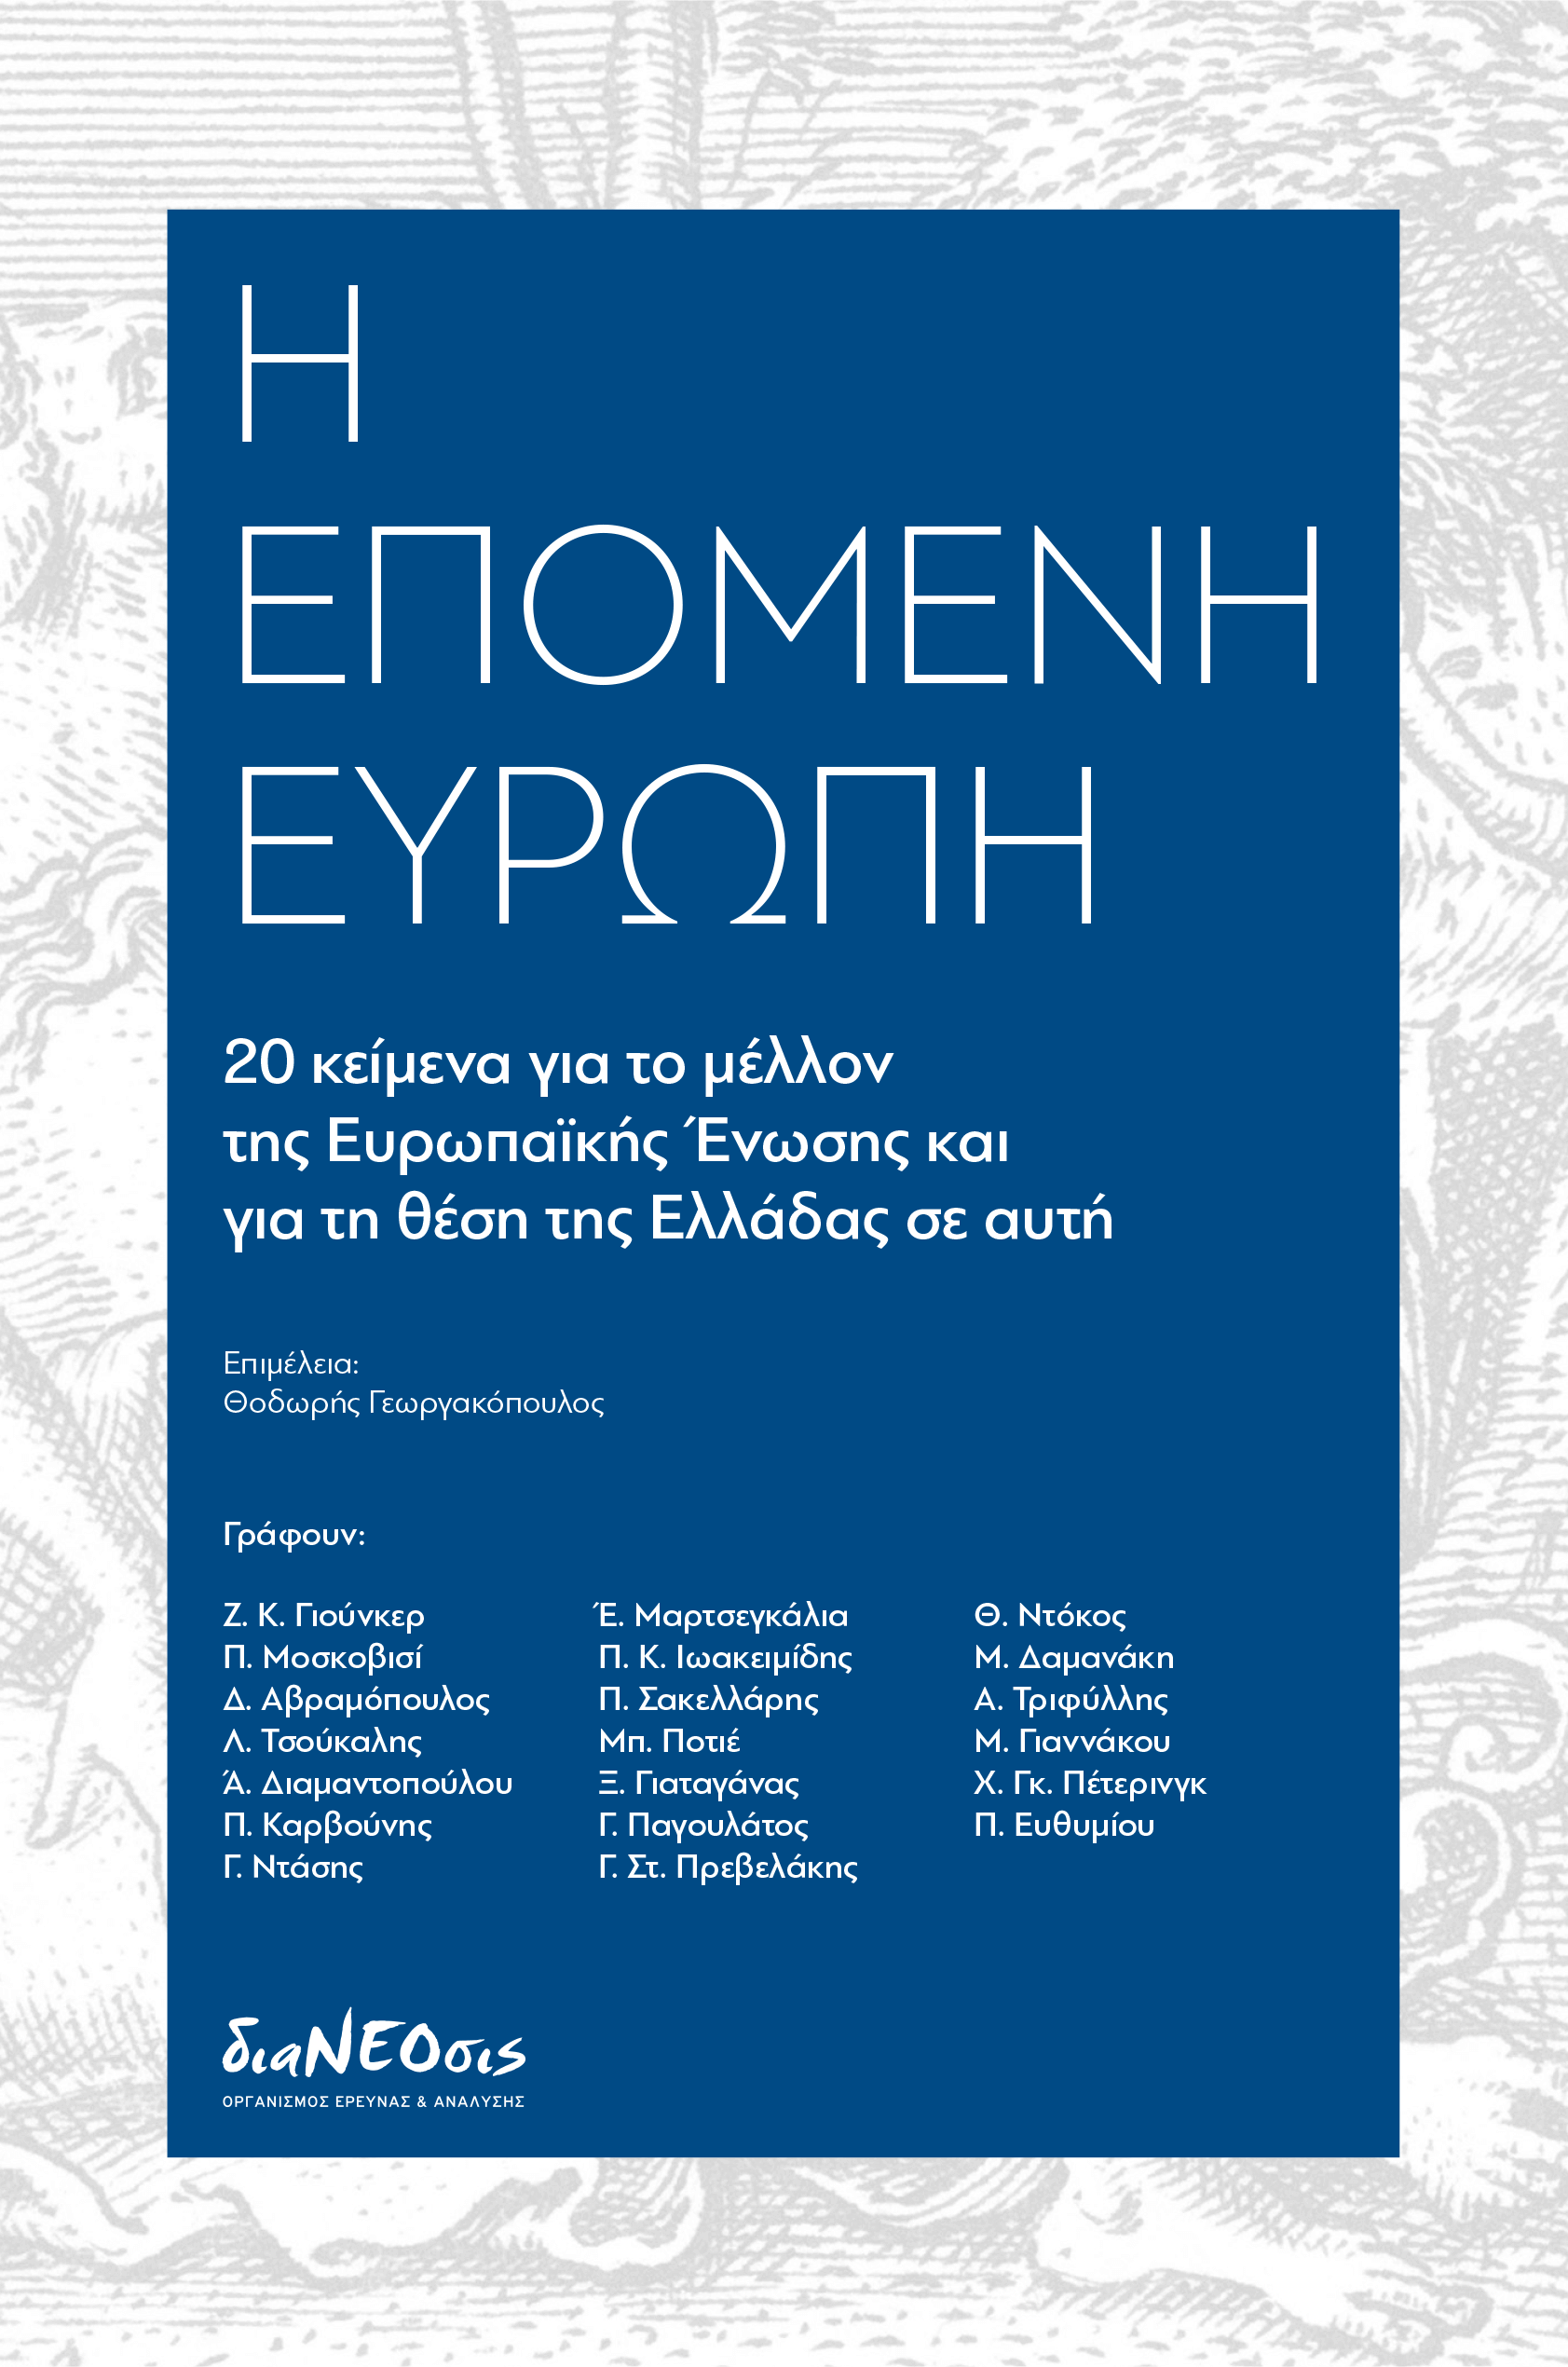 eubook cover